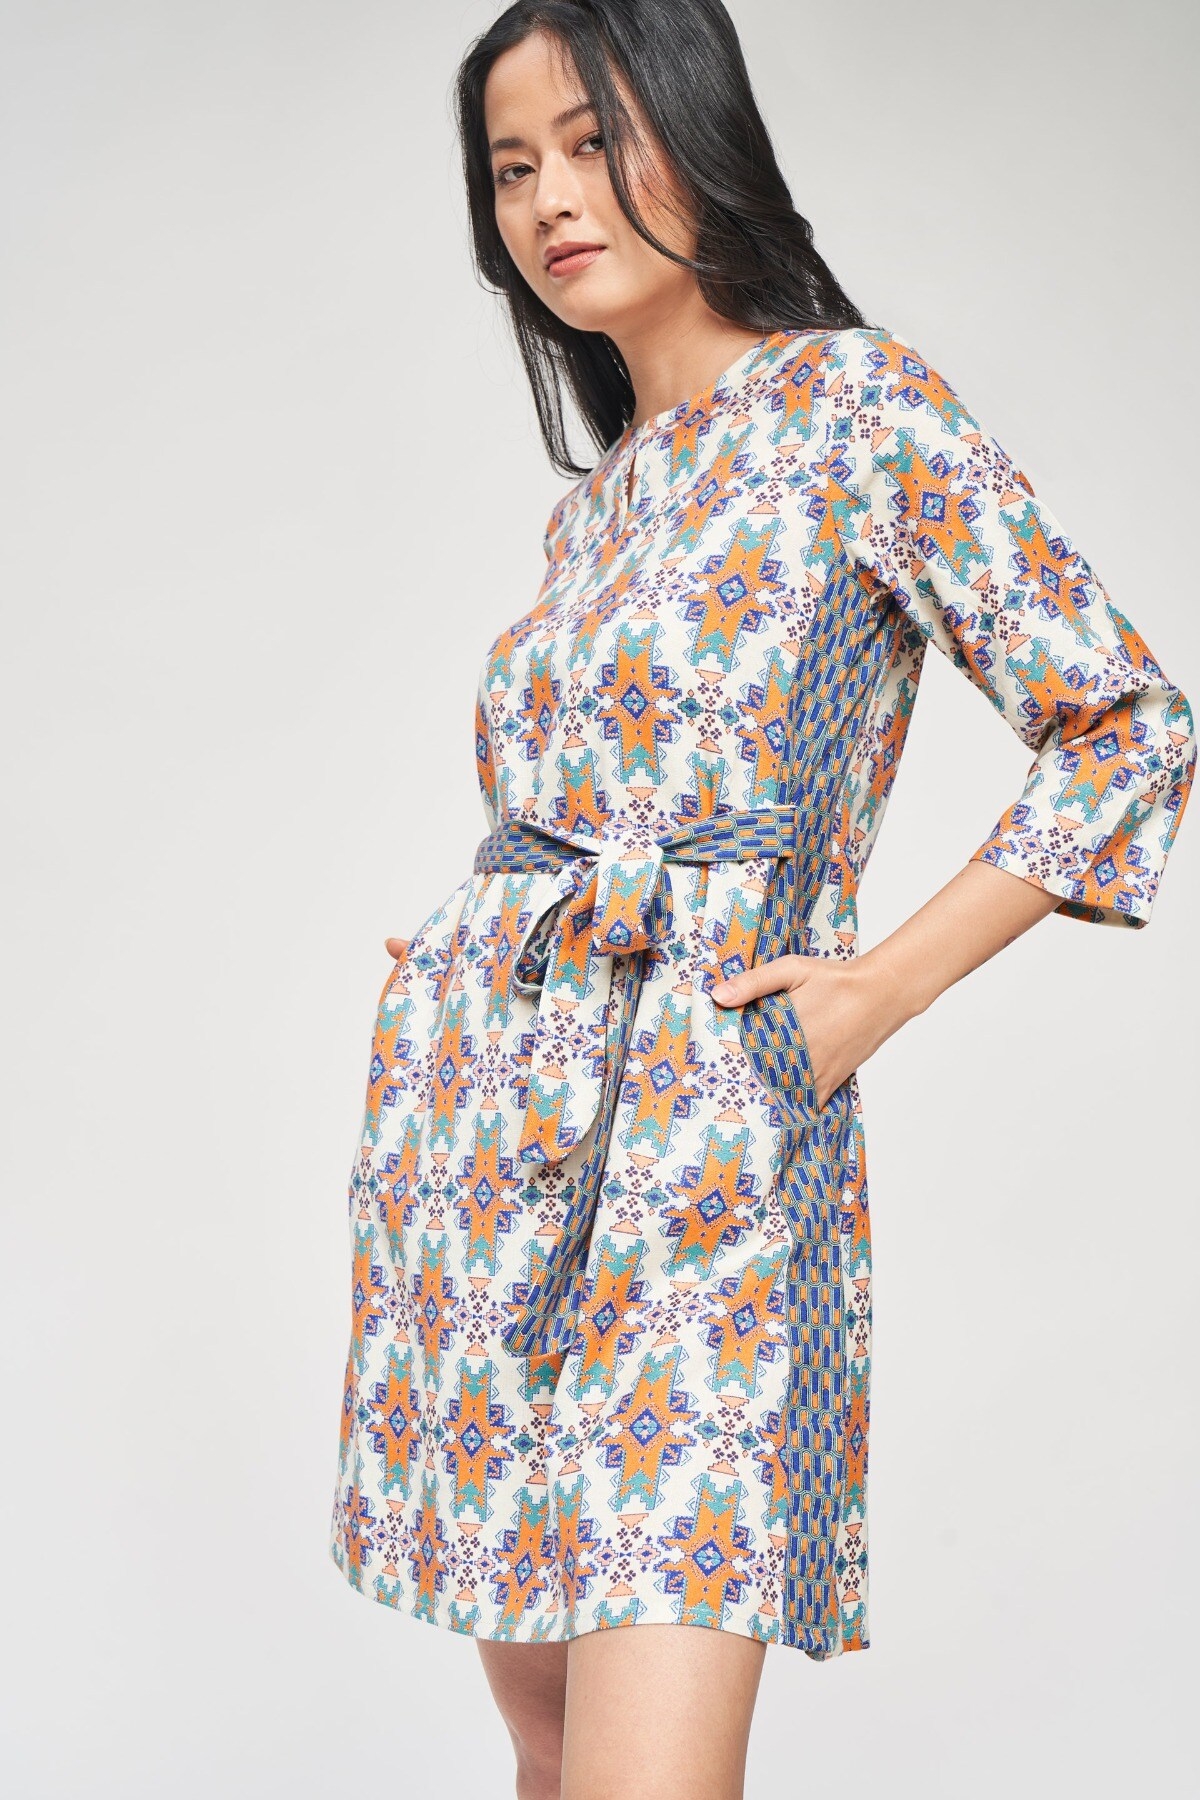 Global Desi | Off White Geometric Printed A-Line Dress 2